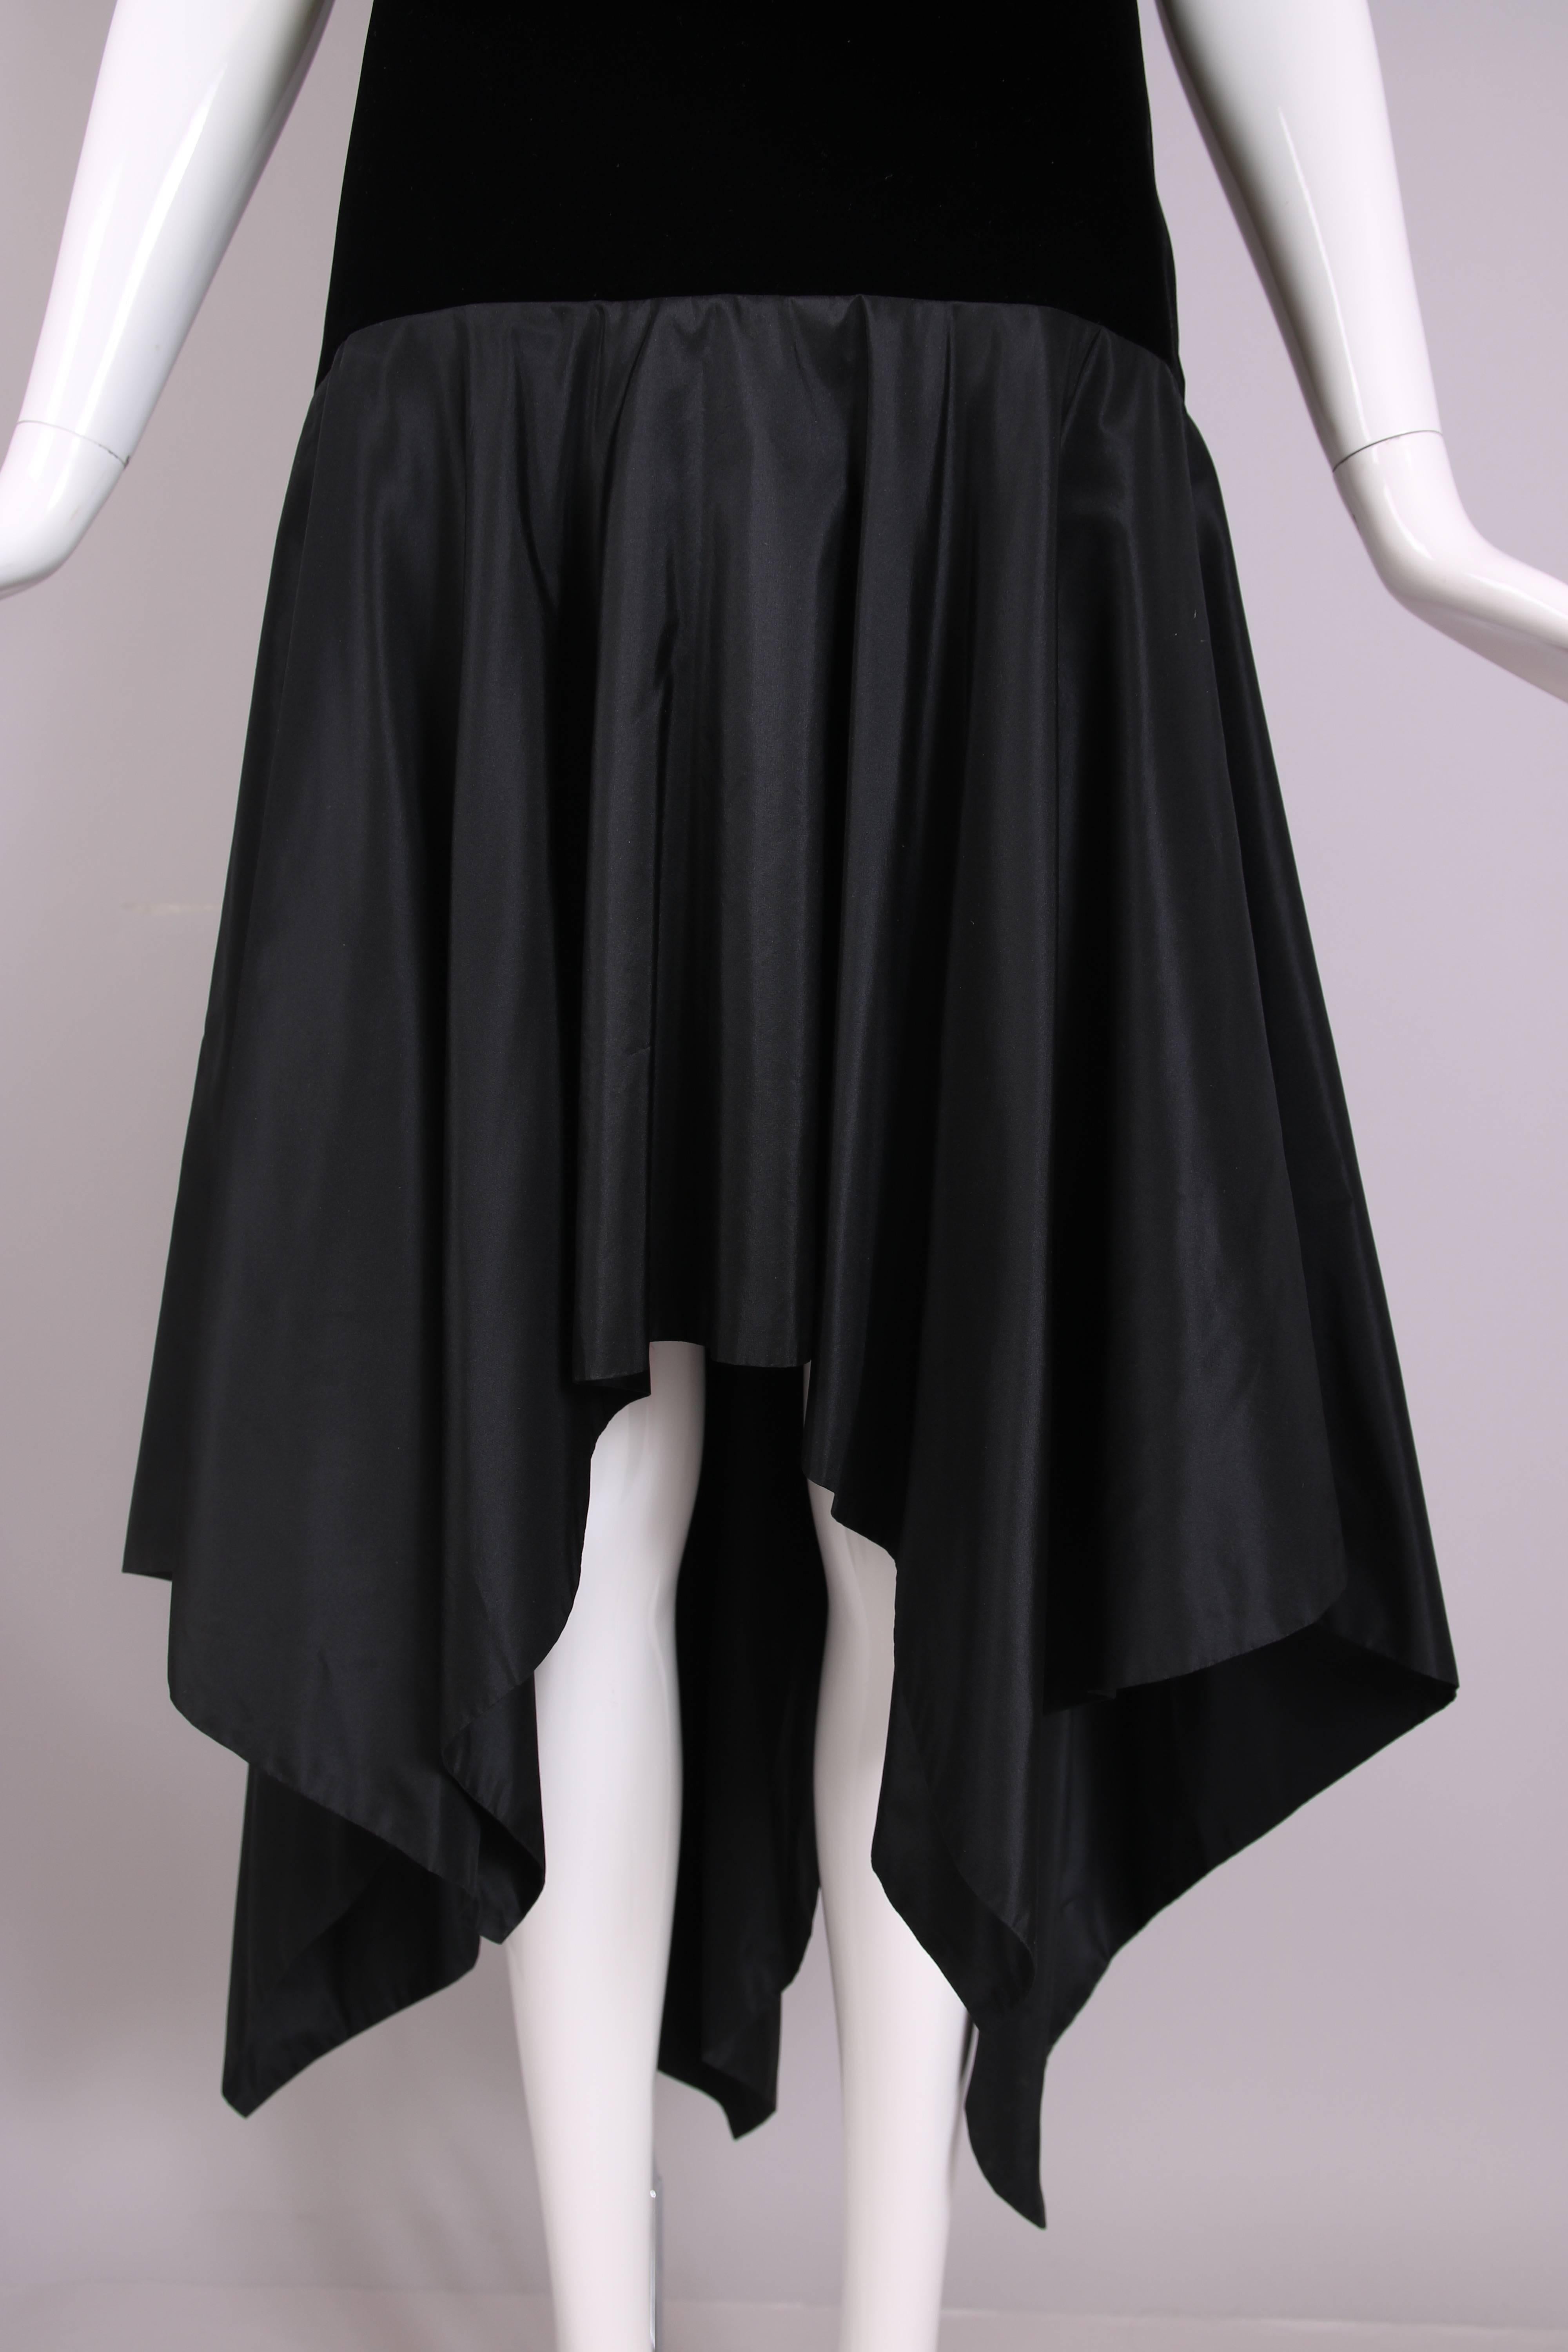 Women's Lanvin Haute Couture Black Velvet & Taffeta Cocktail Dress w/Hanky Hem No.91366 For Sale